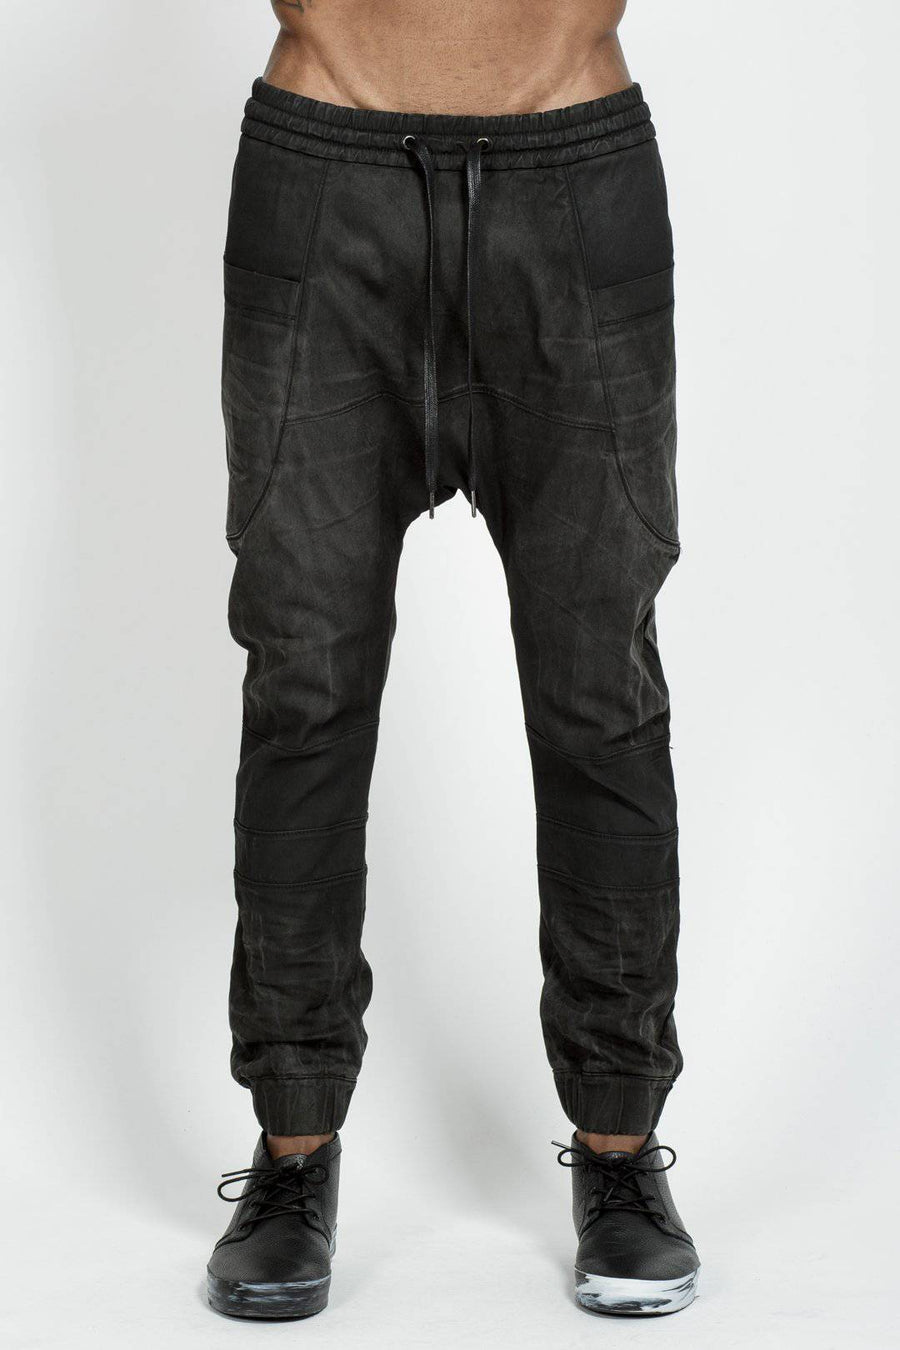 Konus Men's Drop Crotch Sweatpants in Black - shopatkonus